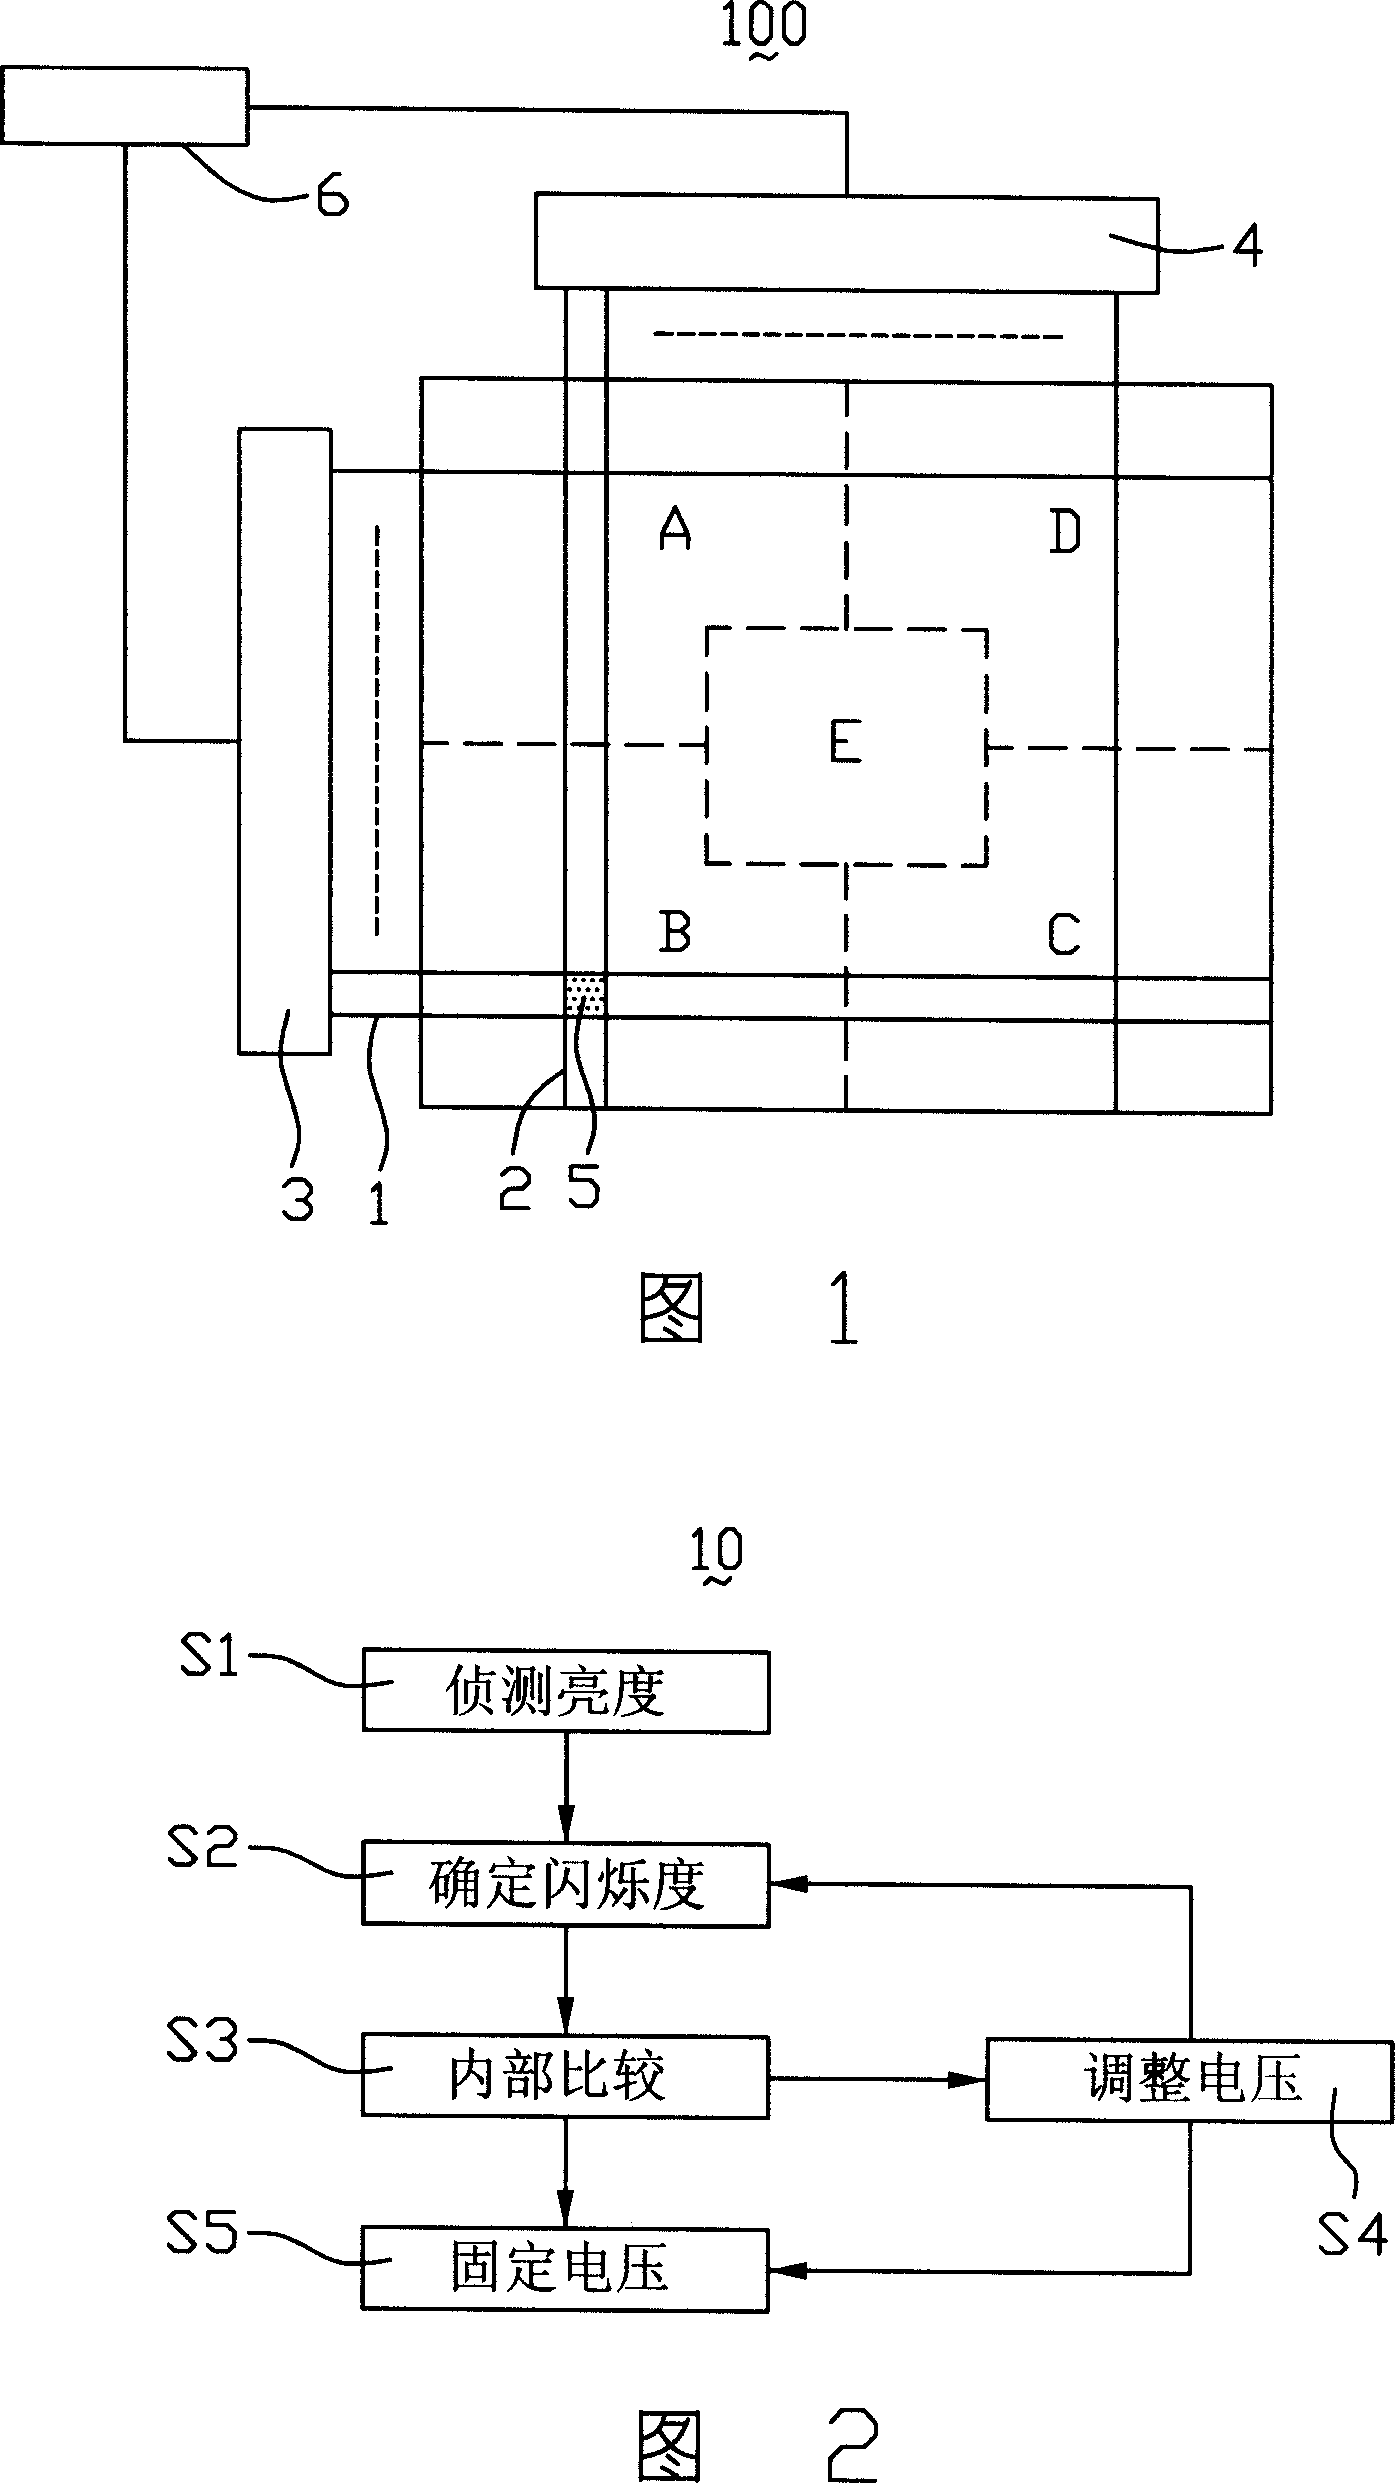 Liquid-crystal display panel and its voltage adjustment